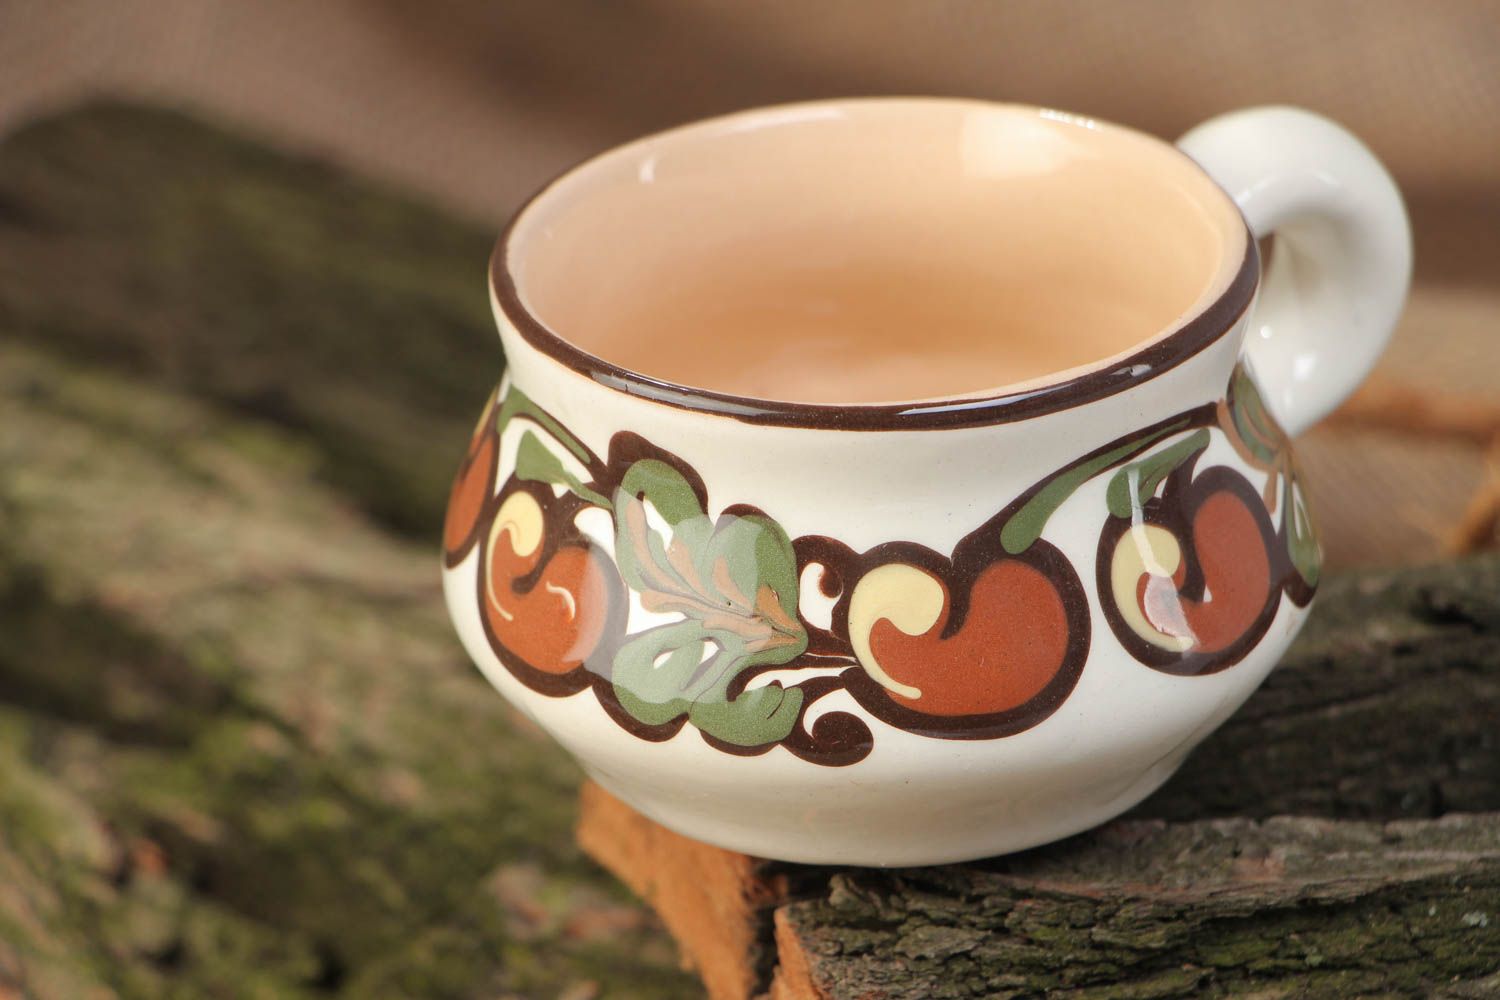 3 oz ceramic glazed coffee cup for expresso 0,46 lb photo 1